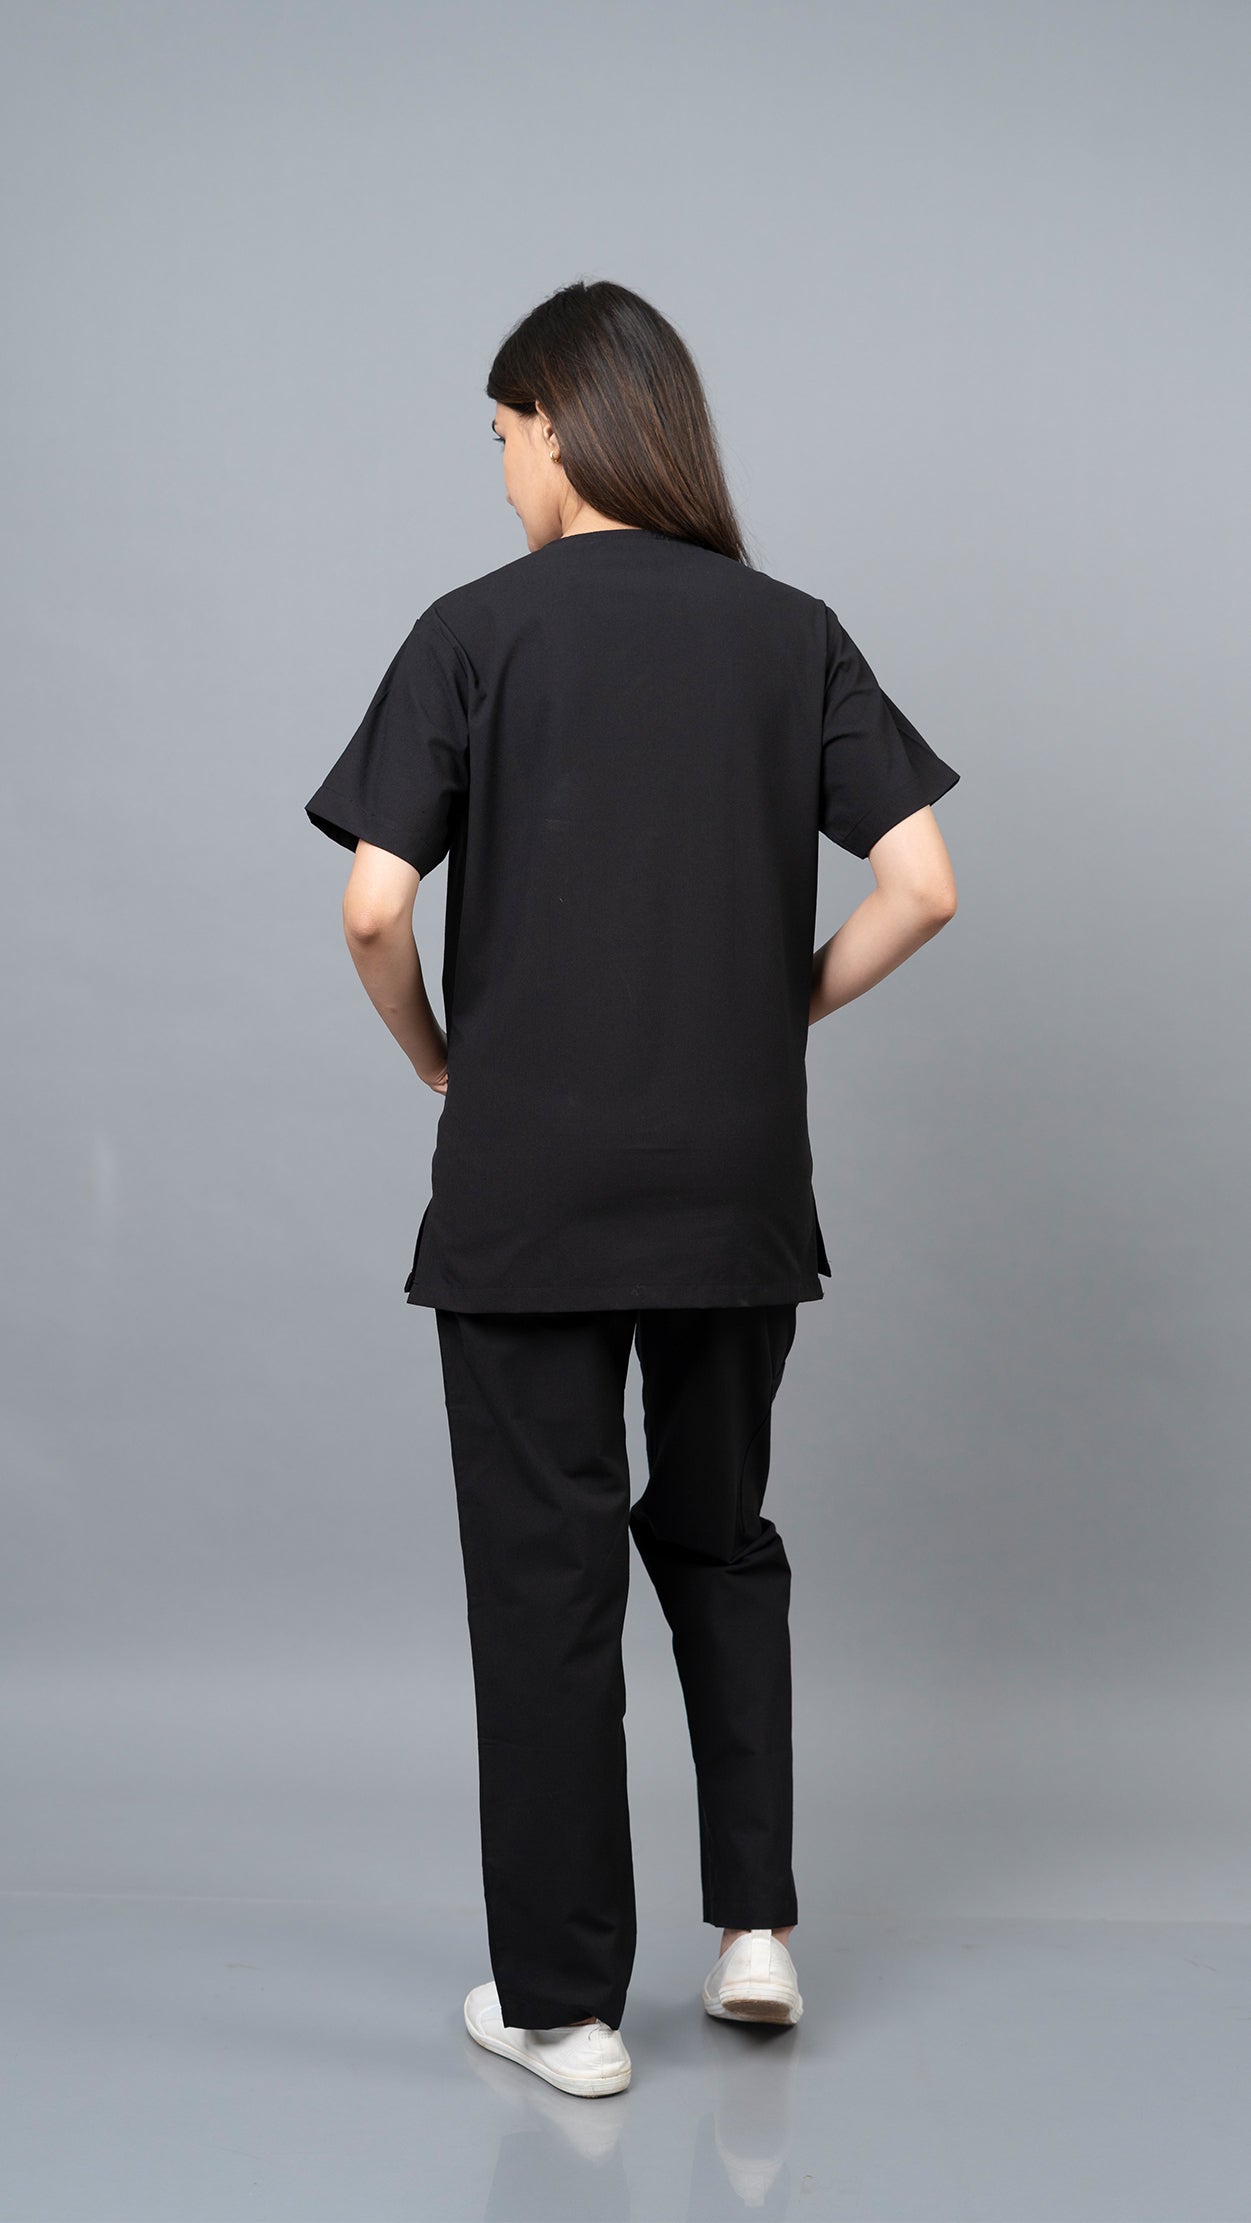 Vastramedwear Medical Scrub Suit for Doctors Women Black